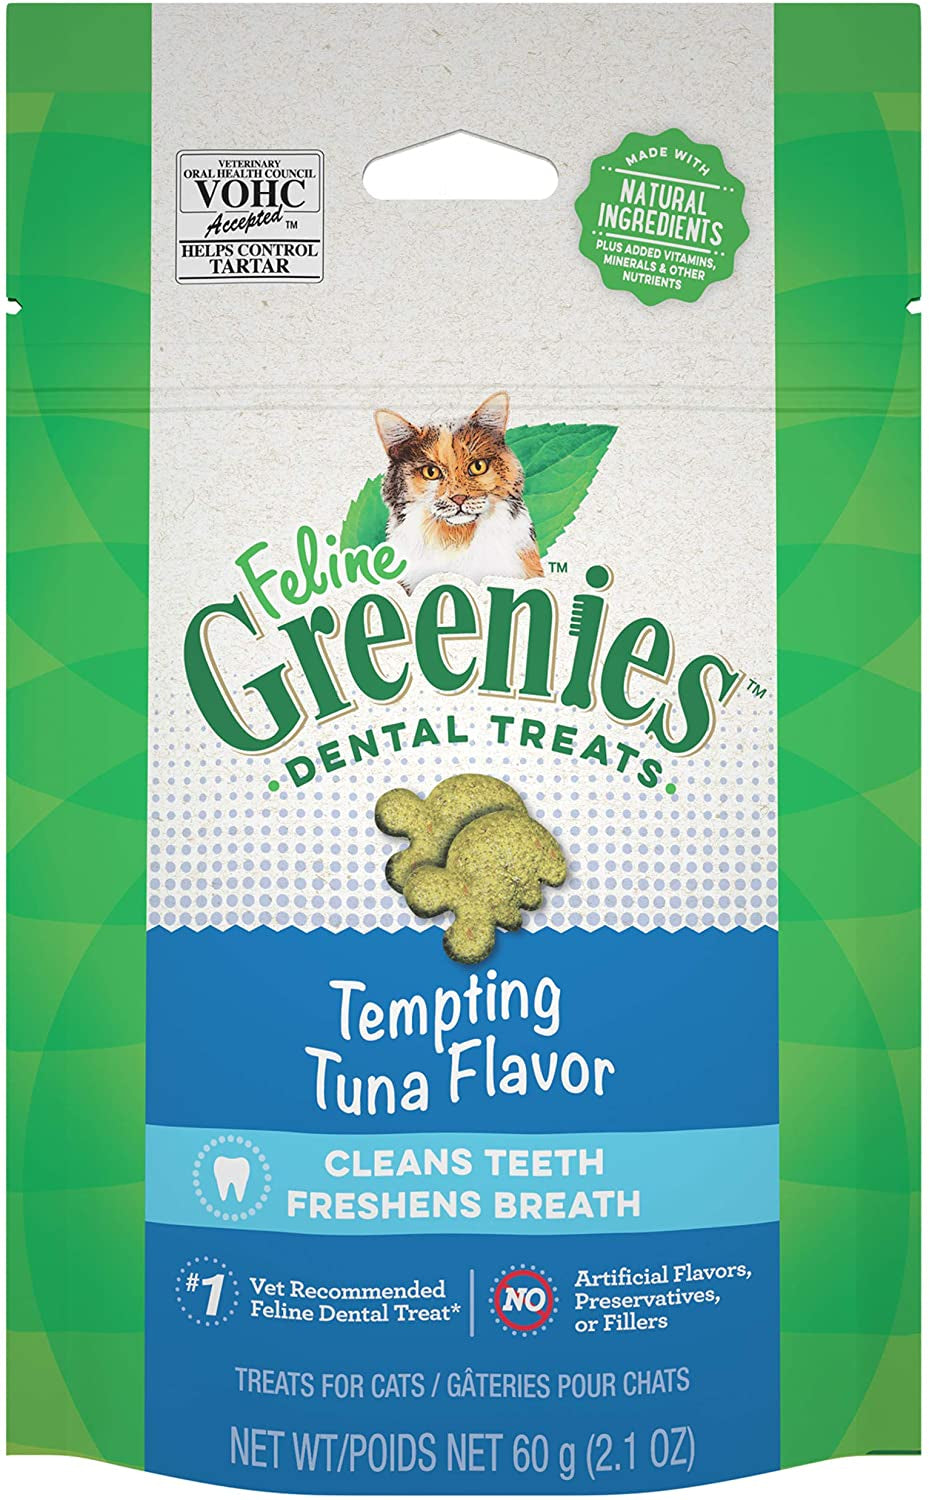 Greenies Feline Dental Treats Tempting Tuna Flavor - PetMountain.com